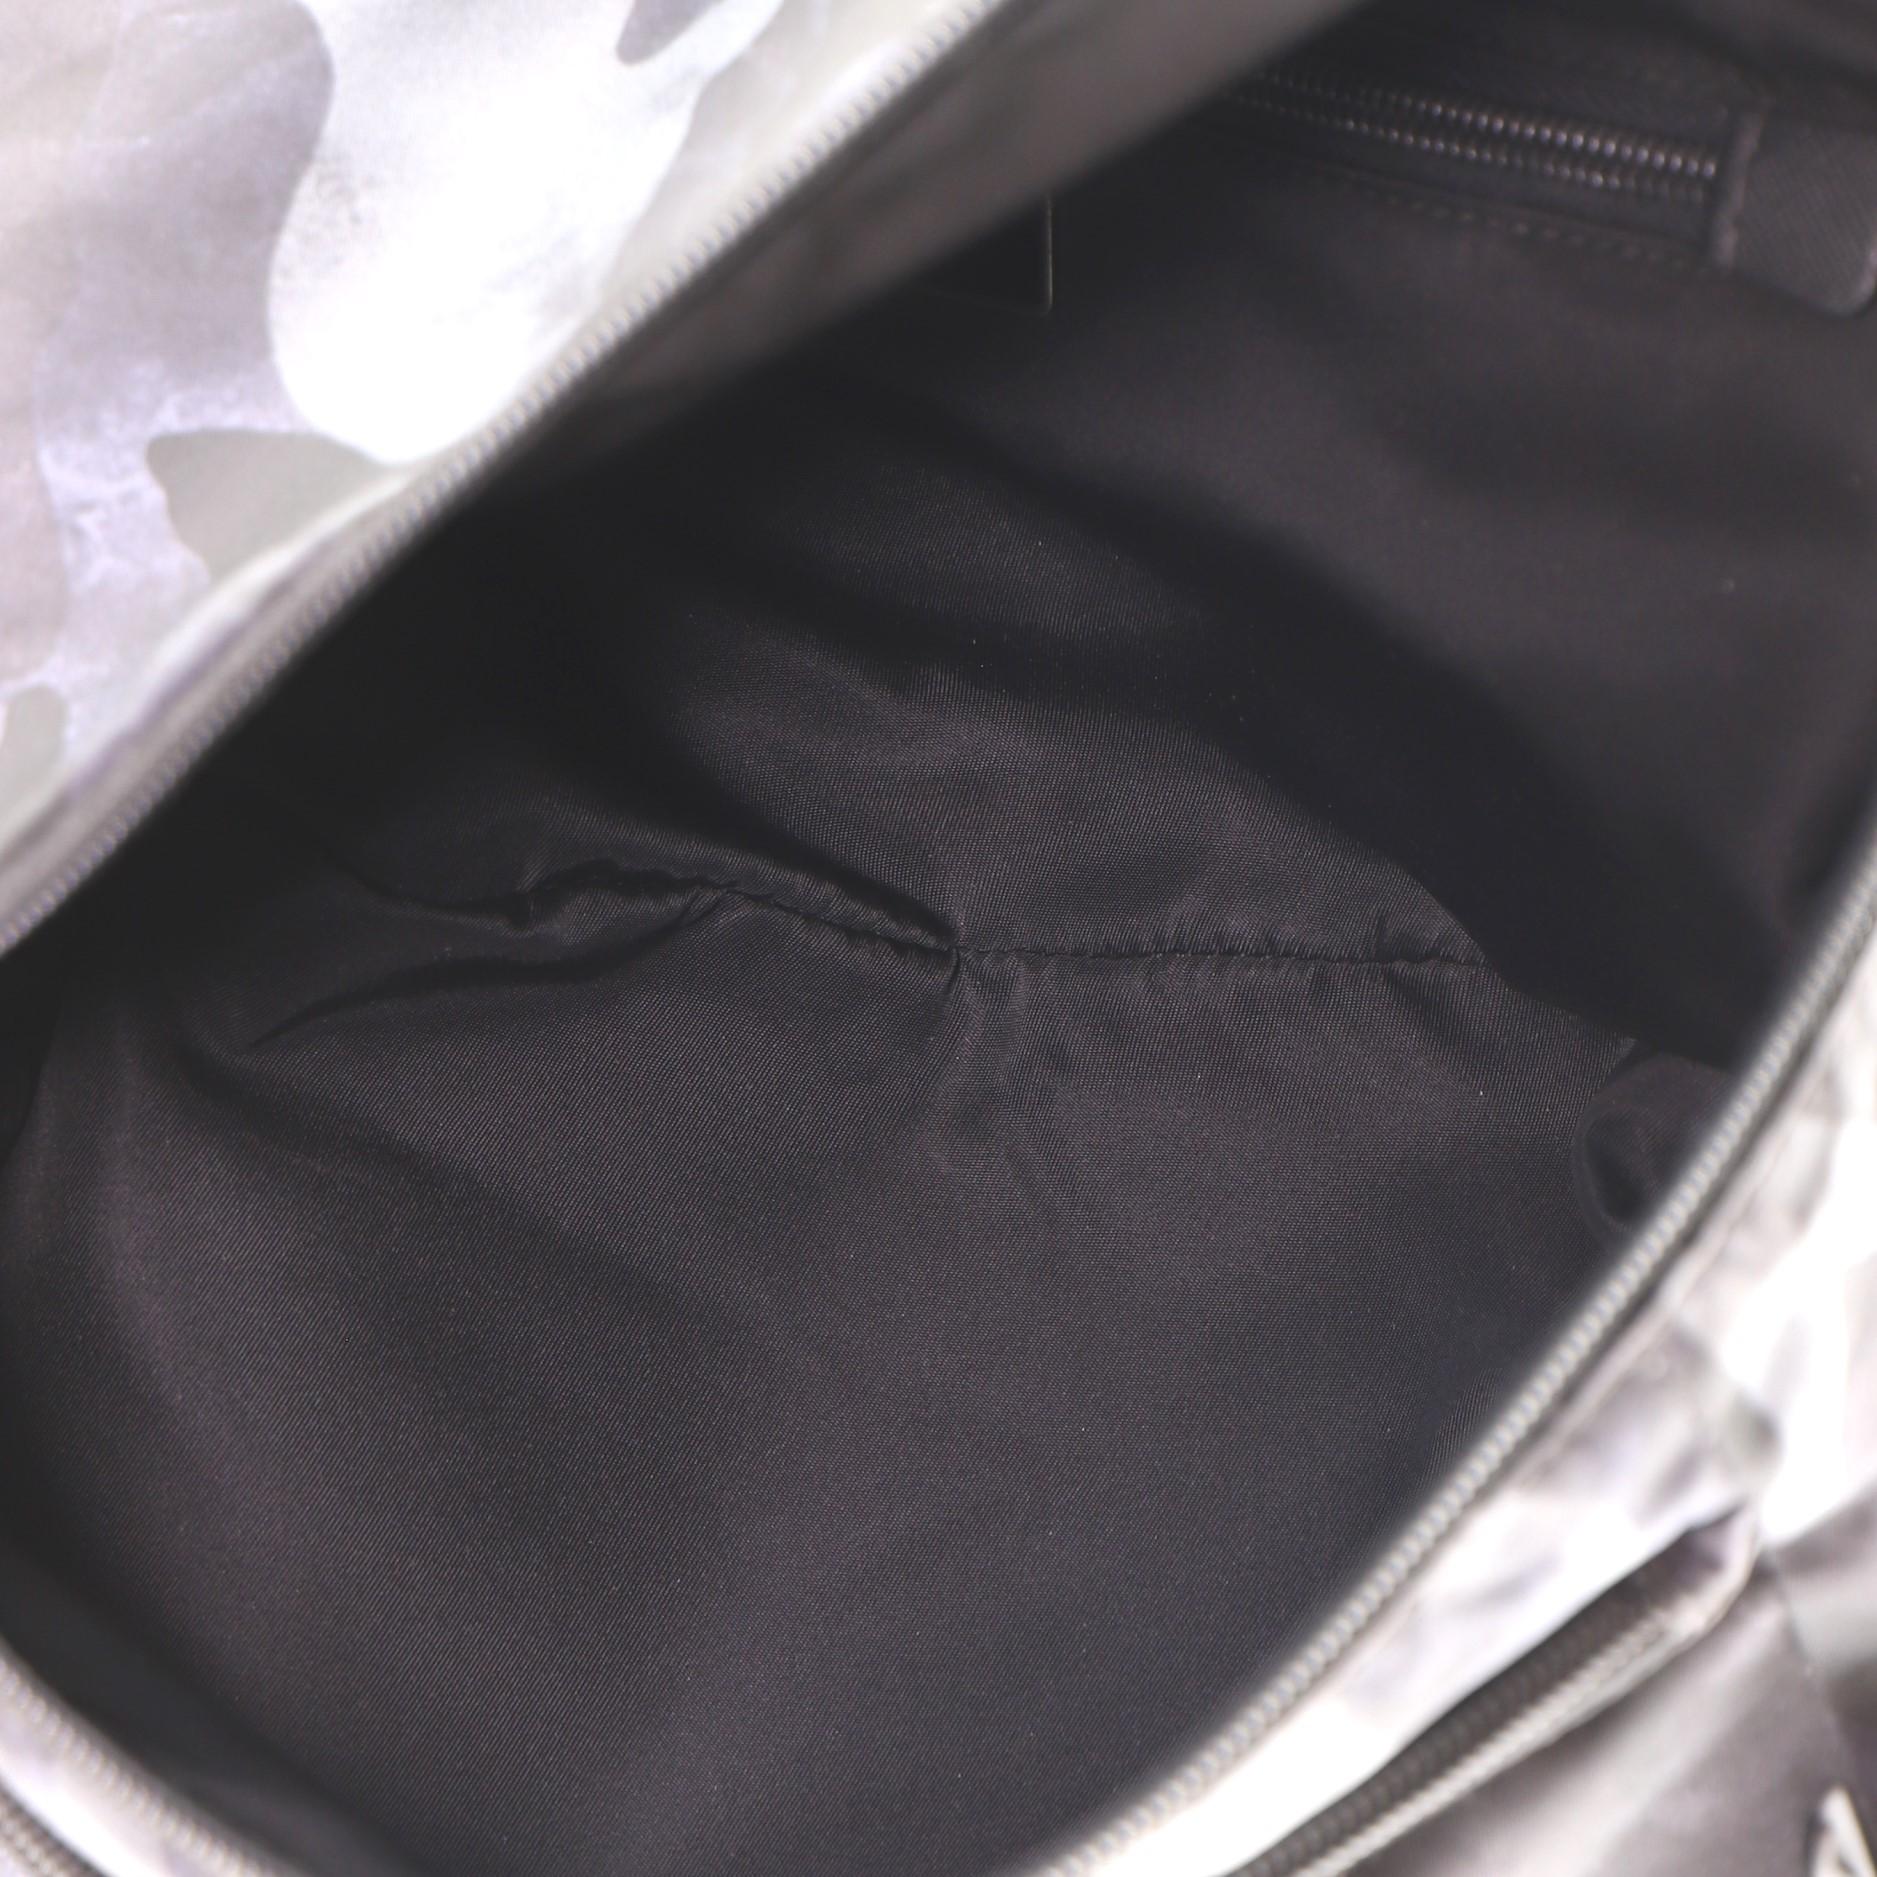 Prada Camouflage Convertible Pocket Belt Bag Tessuto Medium In Good Condition In NY, NY